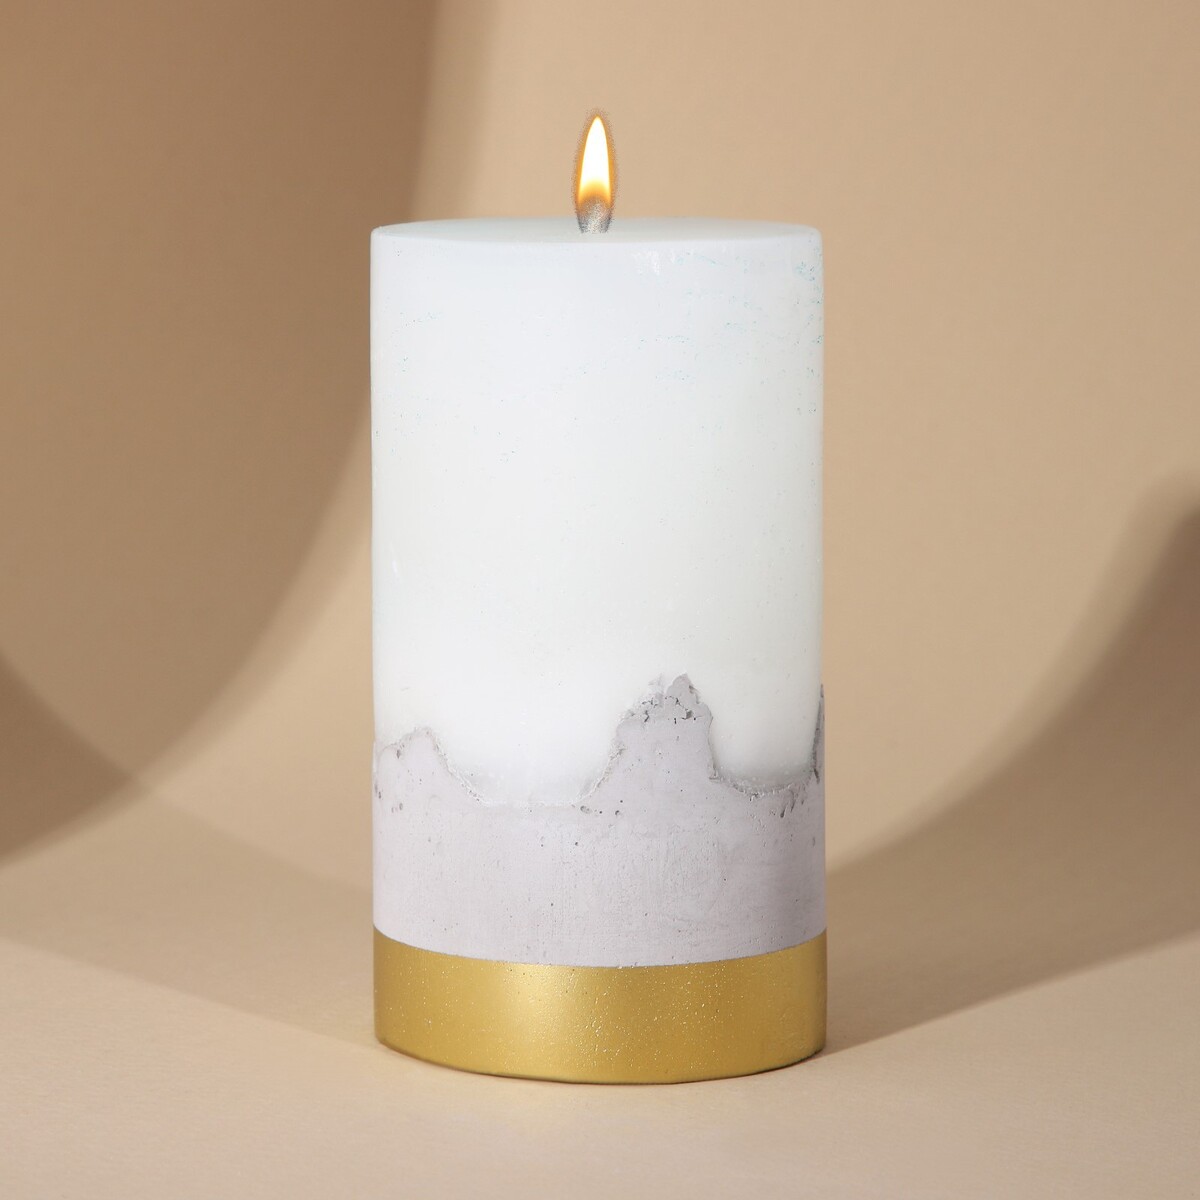 Свеча интерьерная белая с бетоном, низ золото, 13 х 7 см свеча интерьерная белая с бетоном 5 х 5 х17 см